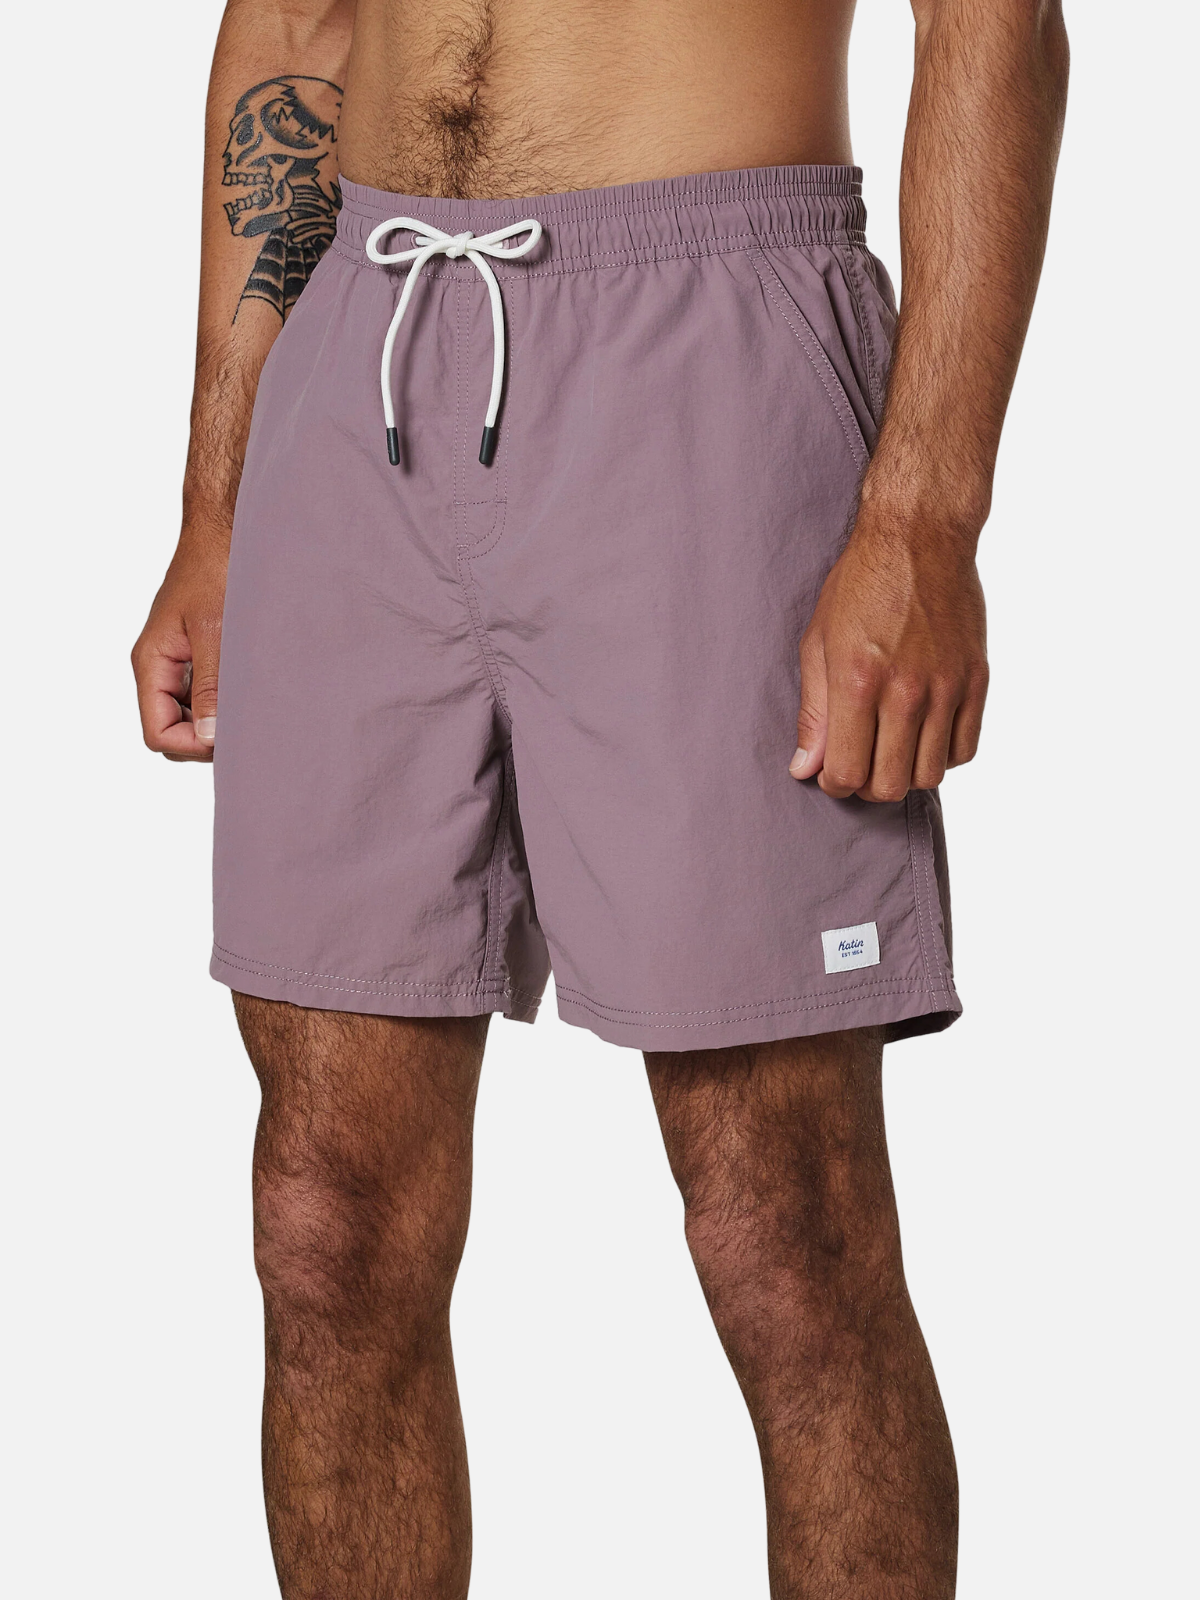 katin poolside volley swim trunk 100% nylon short auralite purple elastic waistband drawstring kempt athens ga georgia men's clothing store